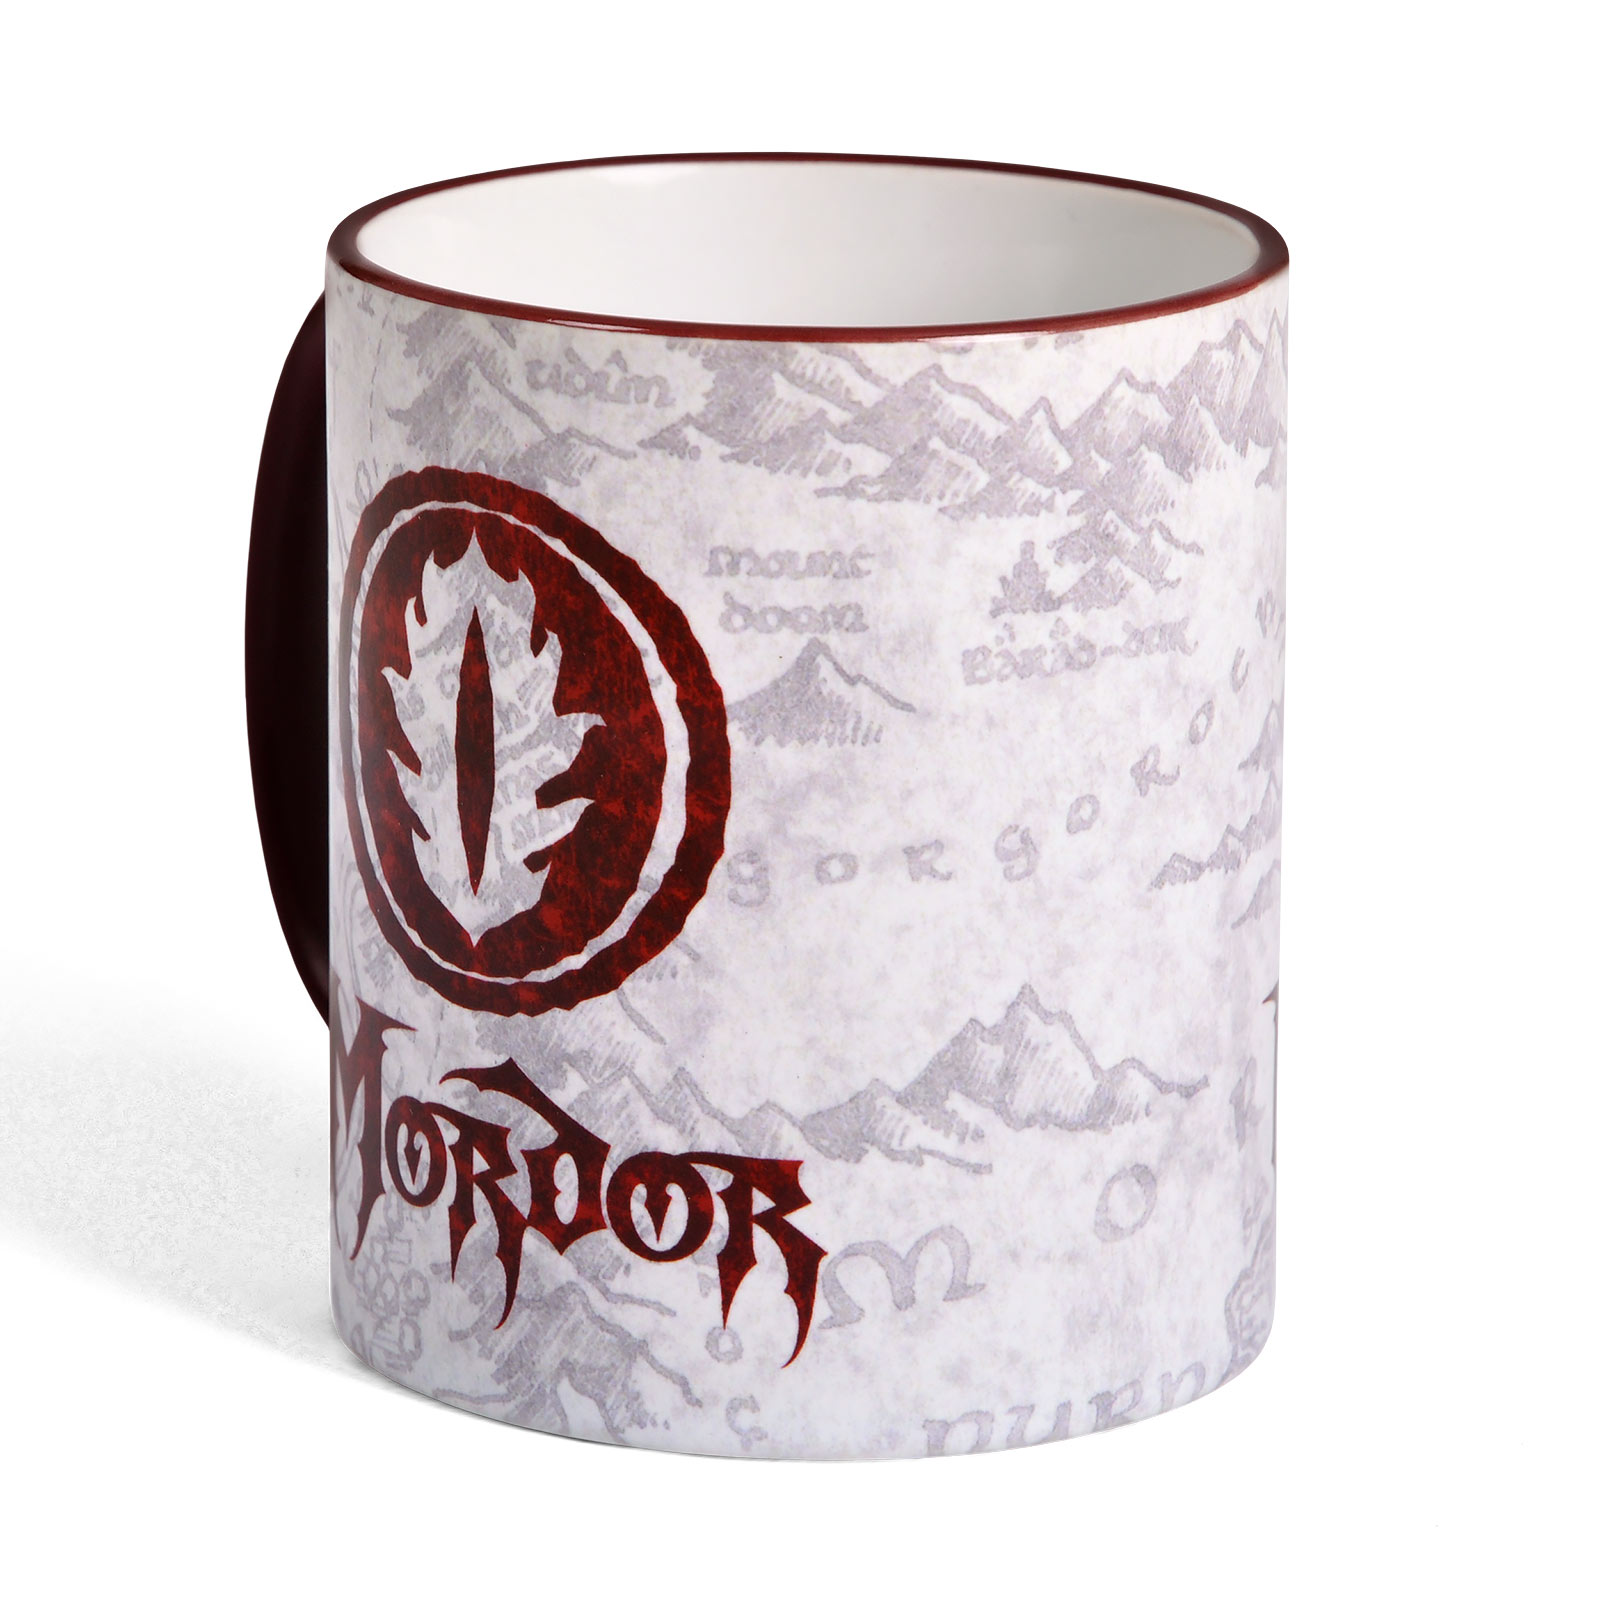 Lord of the Rings - Mordor Mug